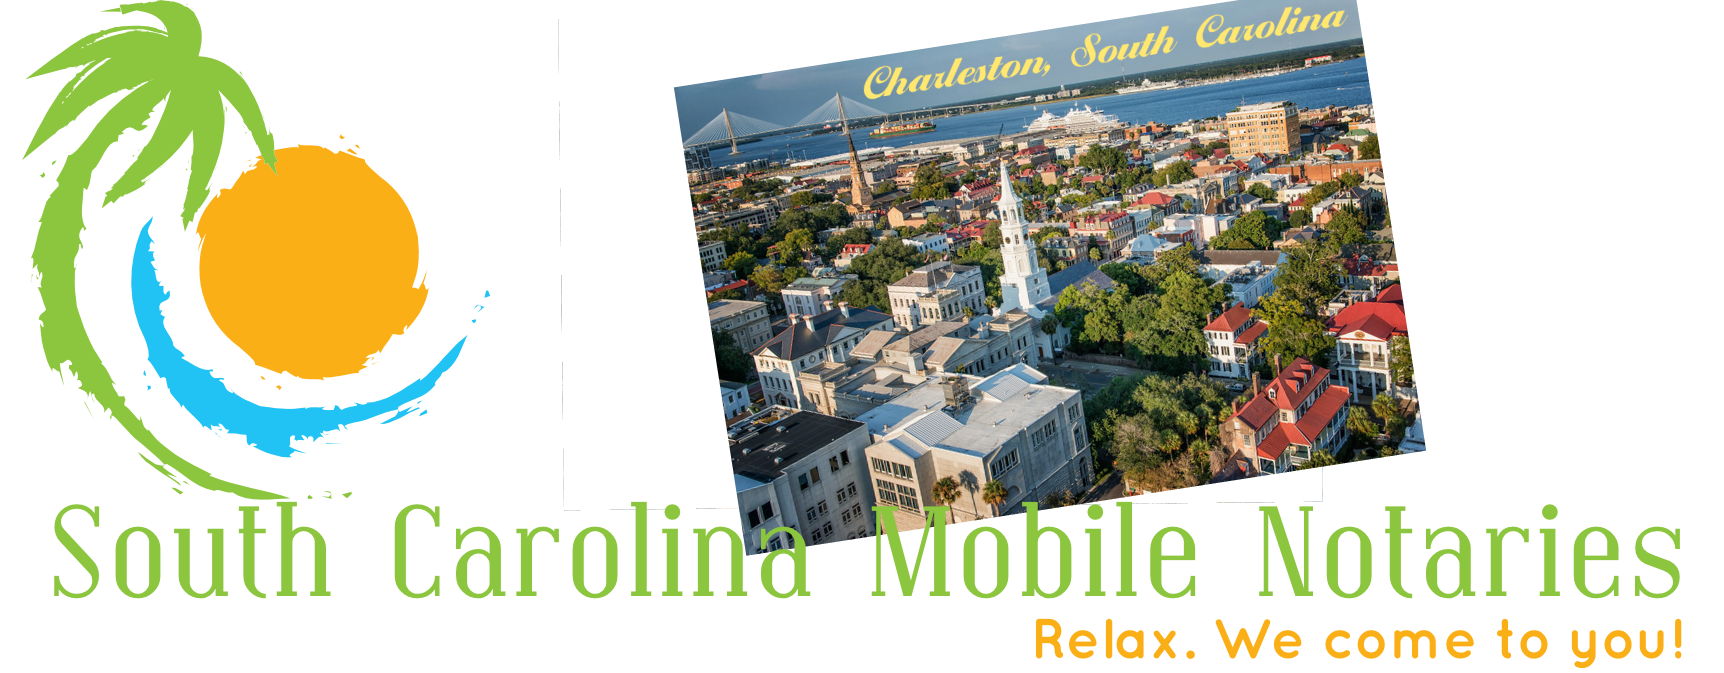 Charleston South Carolna Mobile Notaries; Charleston mobile notary service; traveling notary public Charleston; Charleston wedding officiants; signing agents Charleston, SC